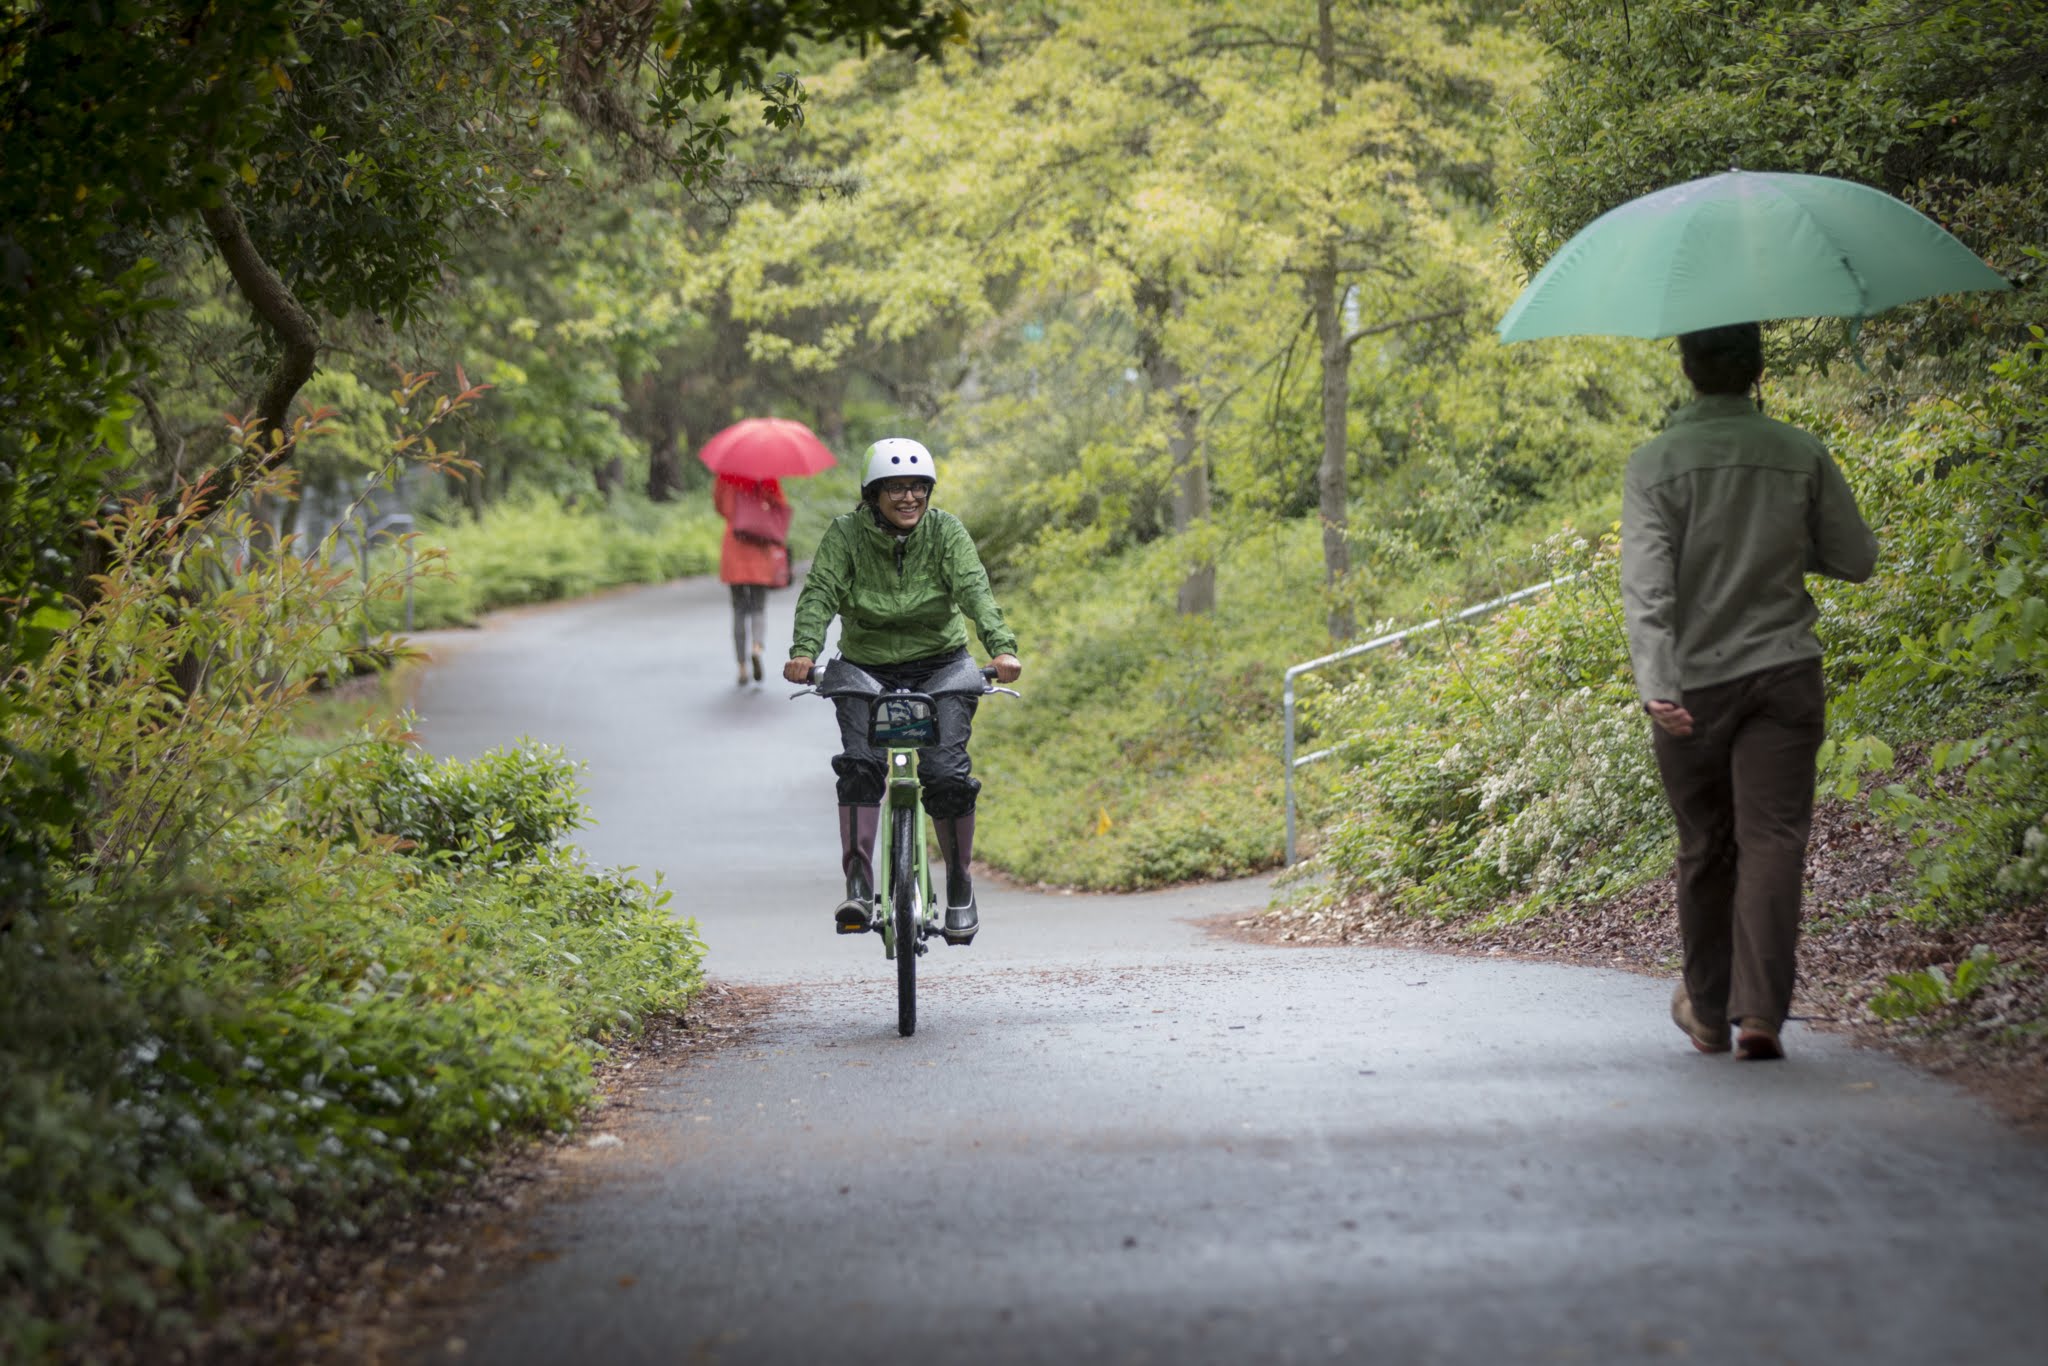 A cyclist in rain gear and a helmet rides past umbrella-toting pedestrians